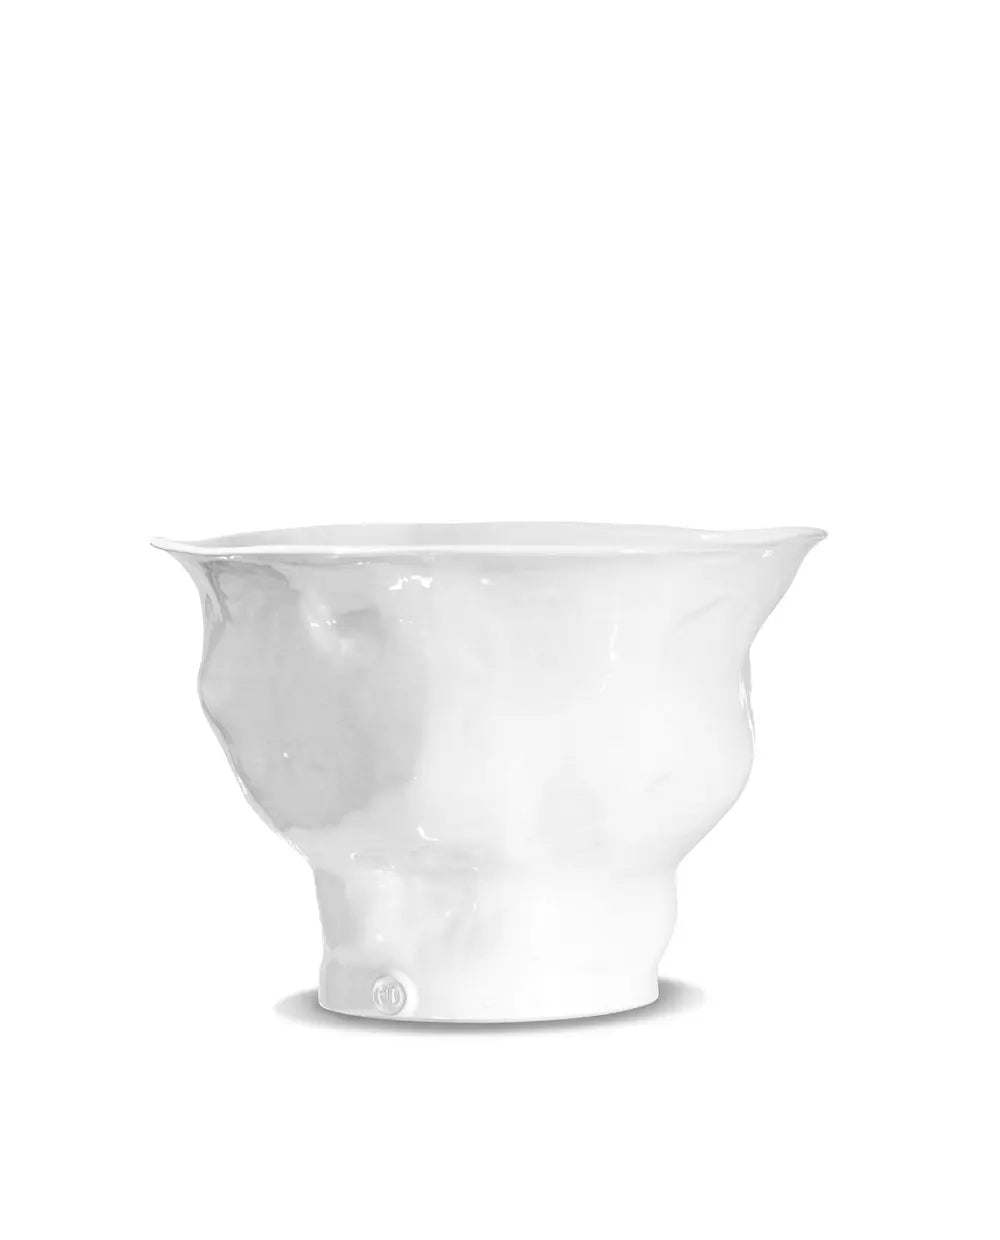 Handmade Ceramic Bowl 4977 by Montes Doggett